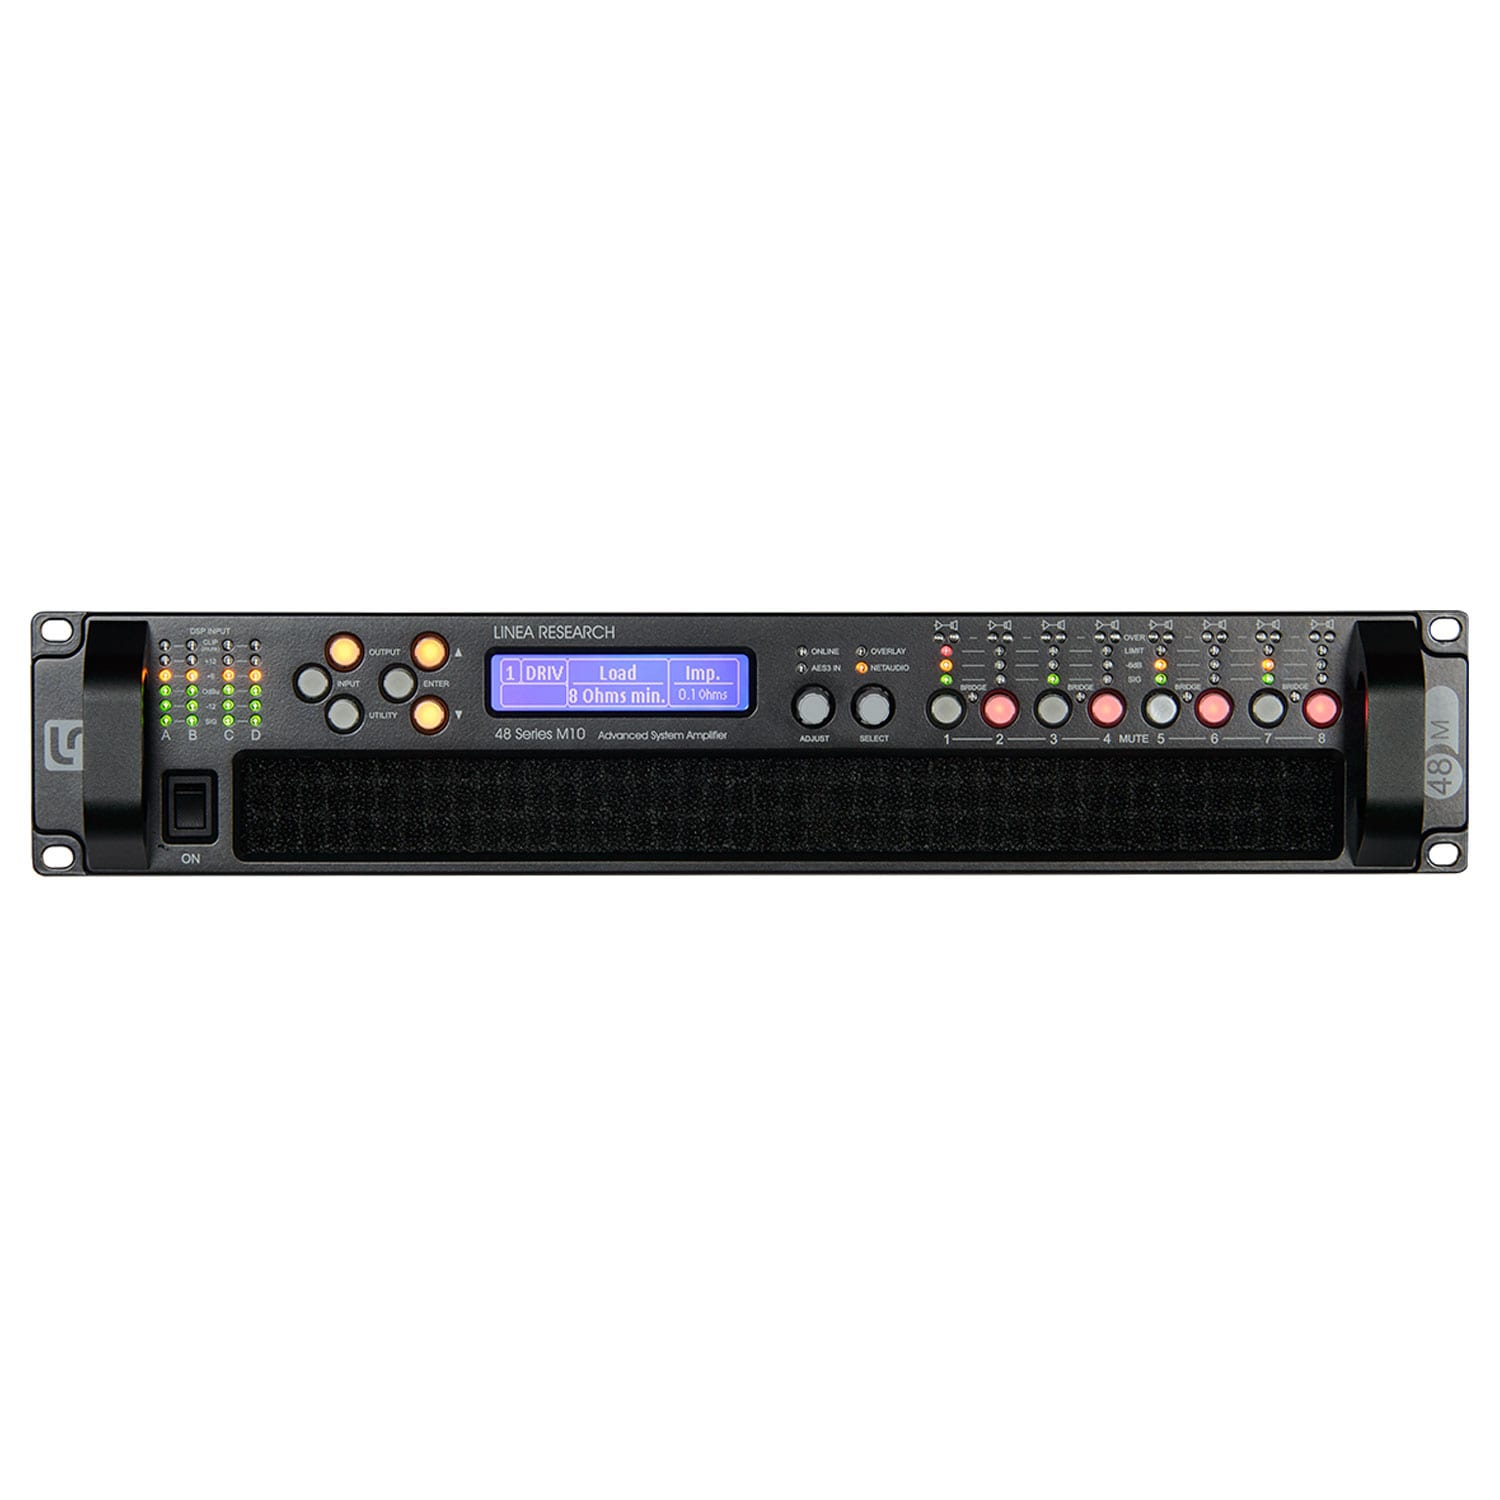 Sisteme SH - Amplificator SH Linea Research 44M10, audioclub.ro